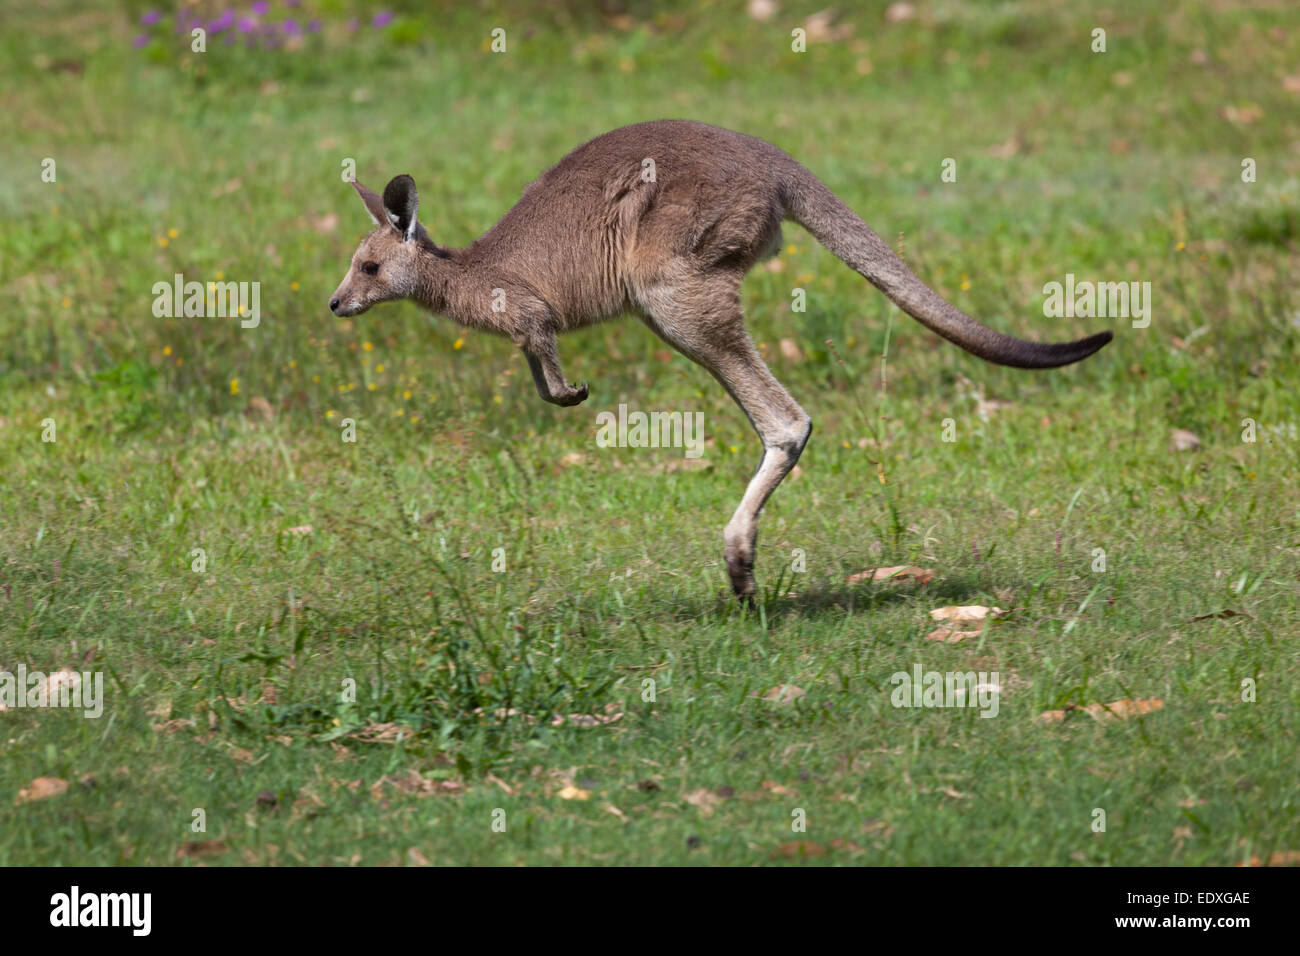 Jumping Kangaroo in Queensland, Australia Stock Photo